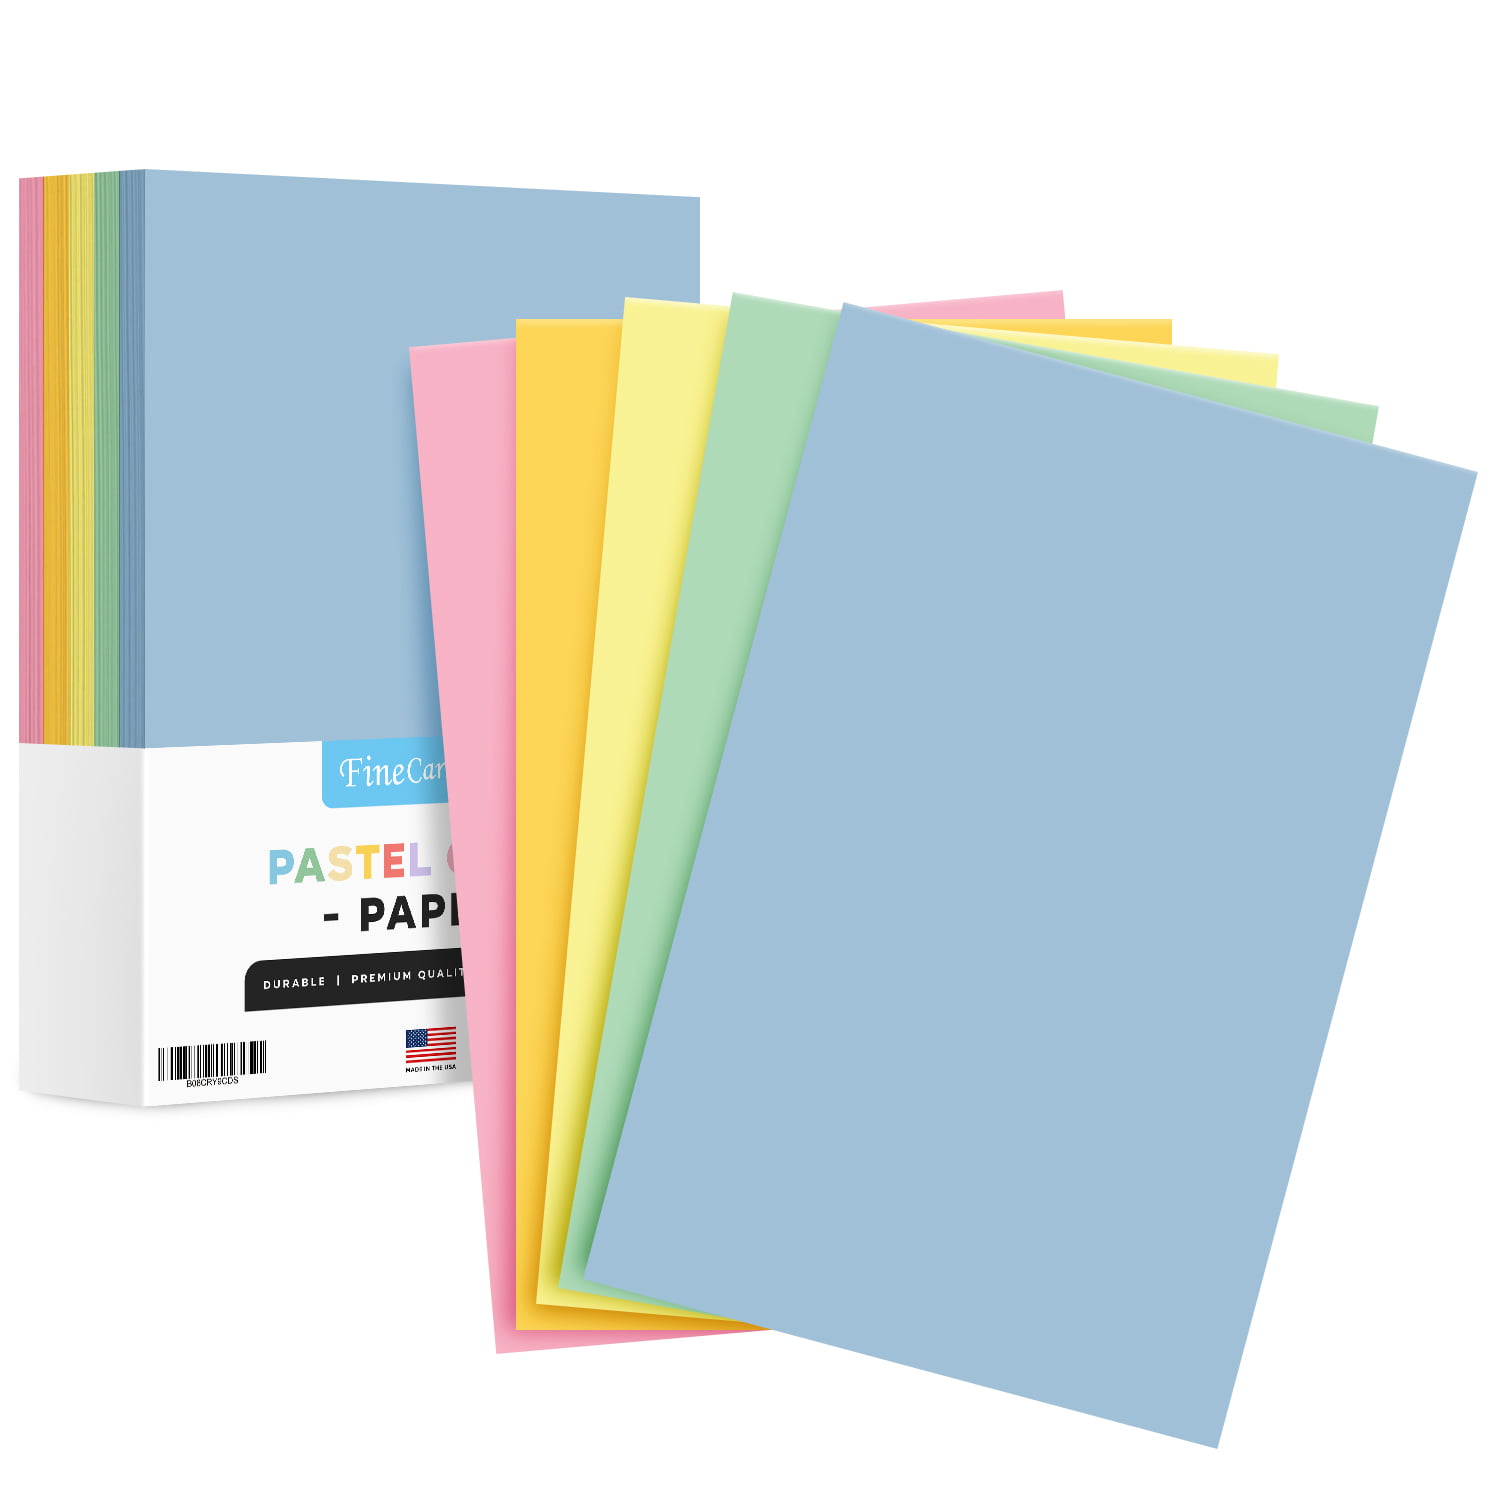 Artwork Premium Multipurpose A4 Paper Multiple Packs Offer Home & Business 